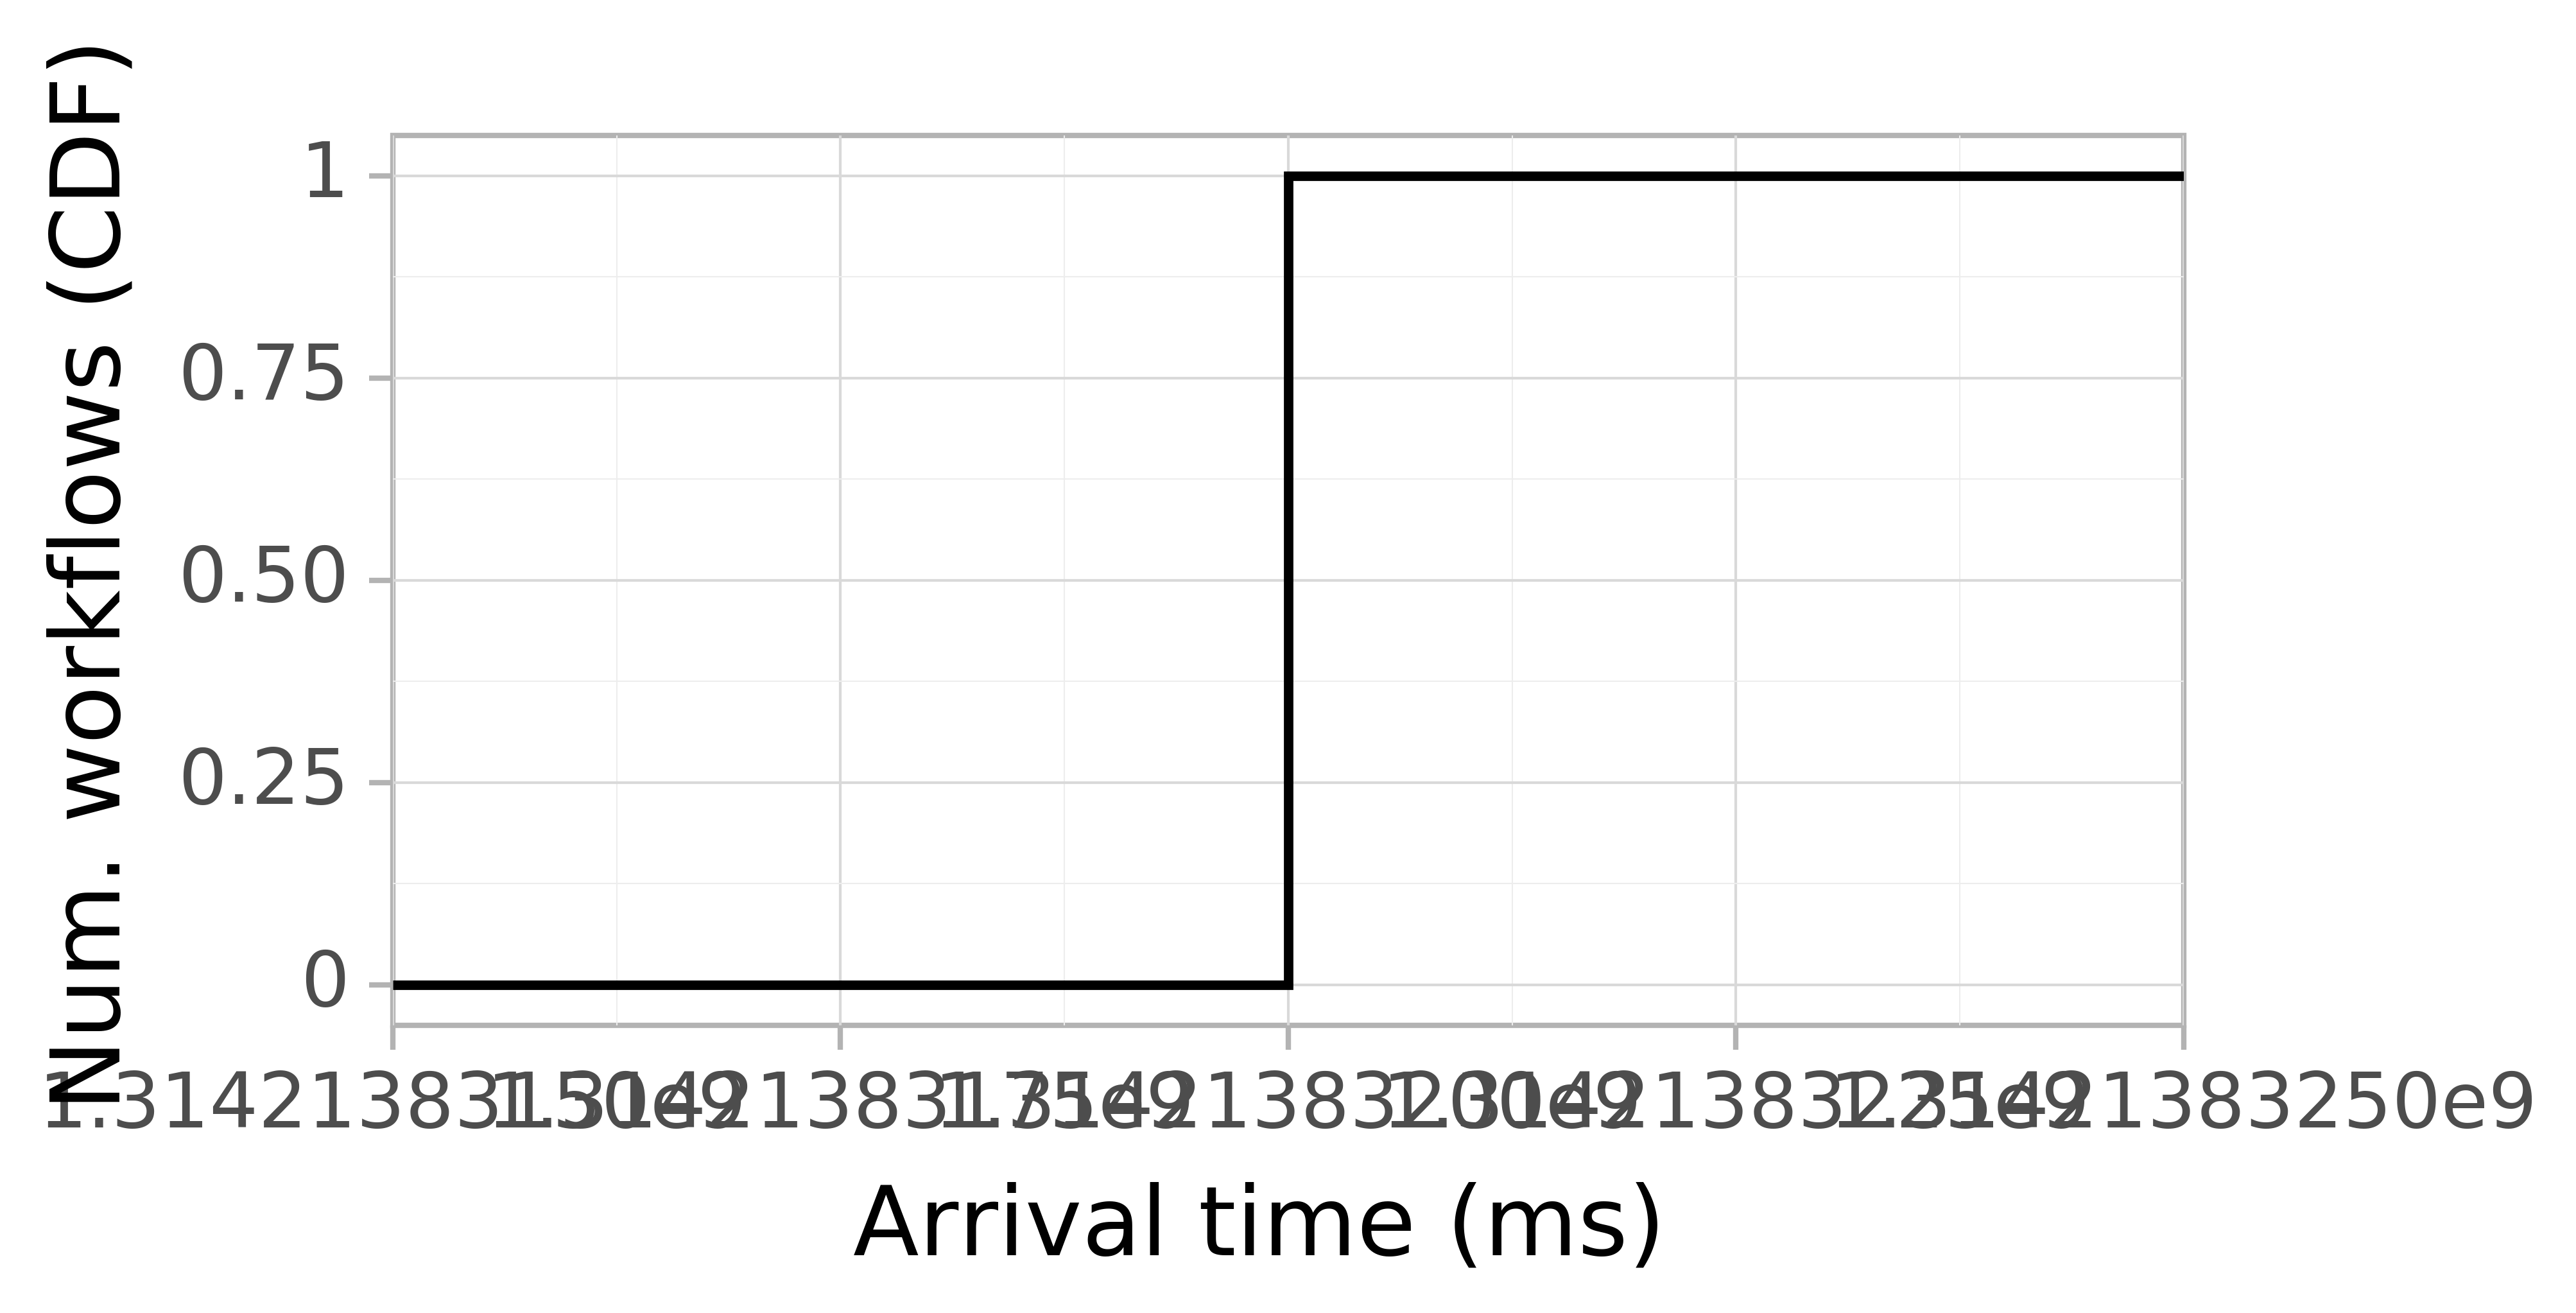 Job arrival CDF graph for the Pegasus_P1 trace.